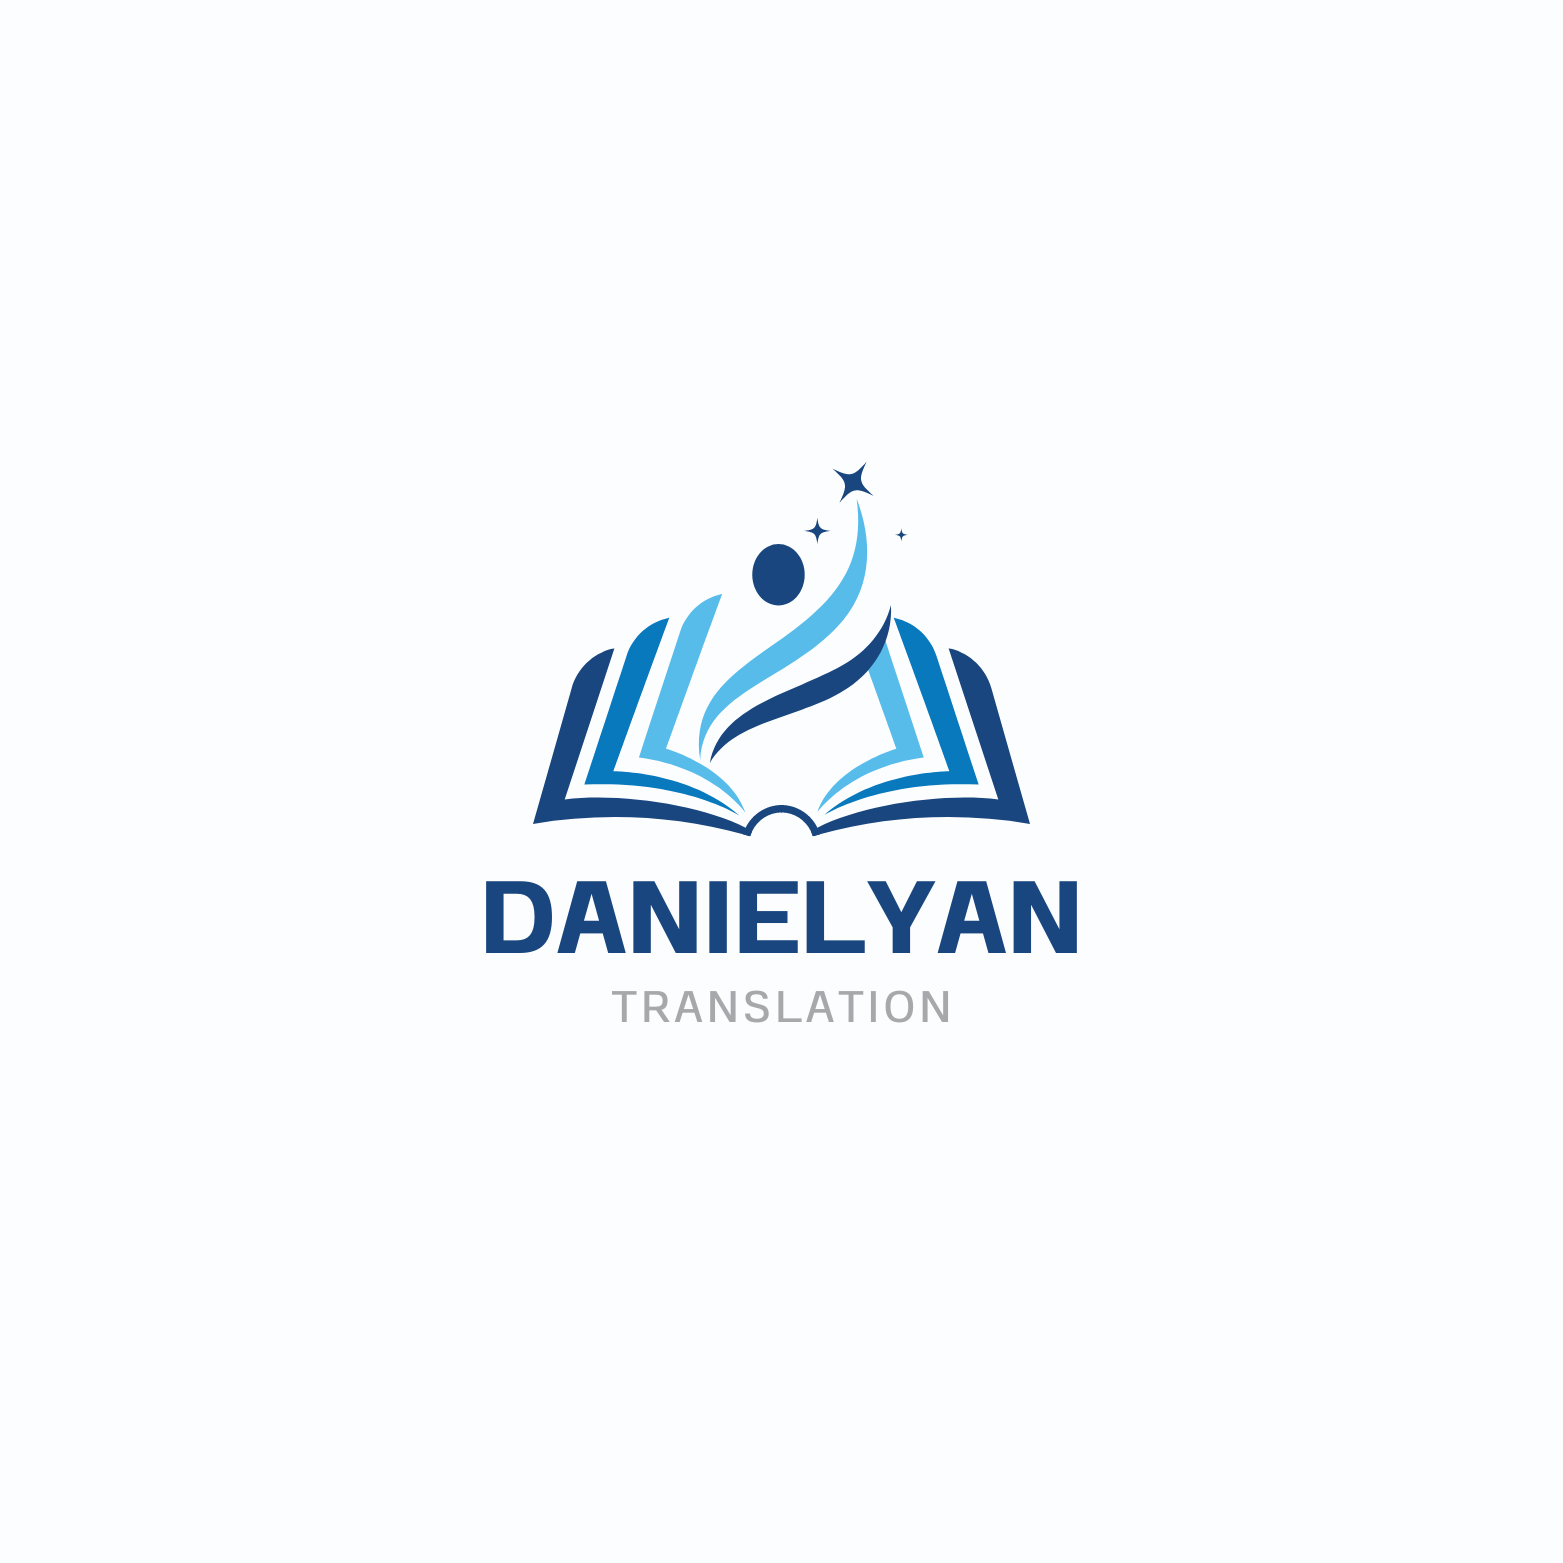 Danielyan translation office